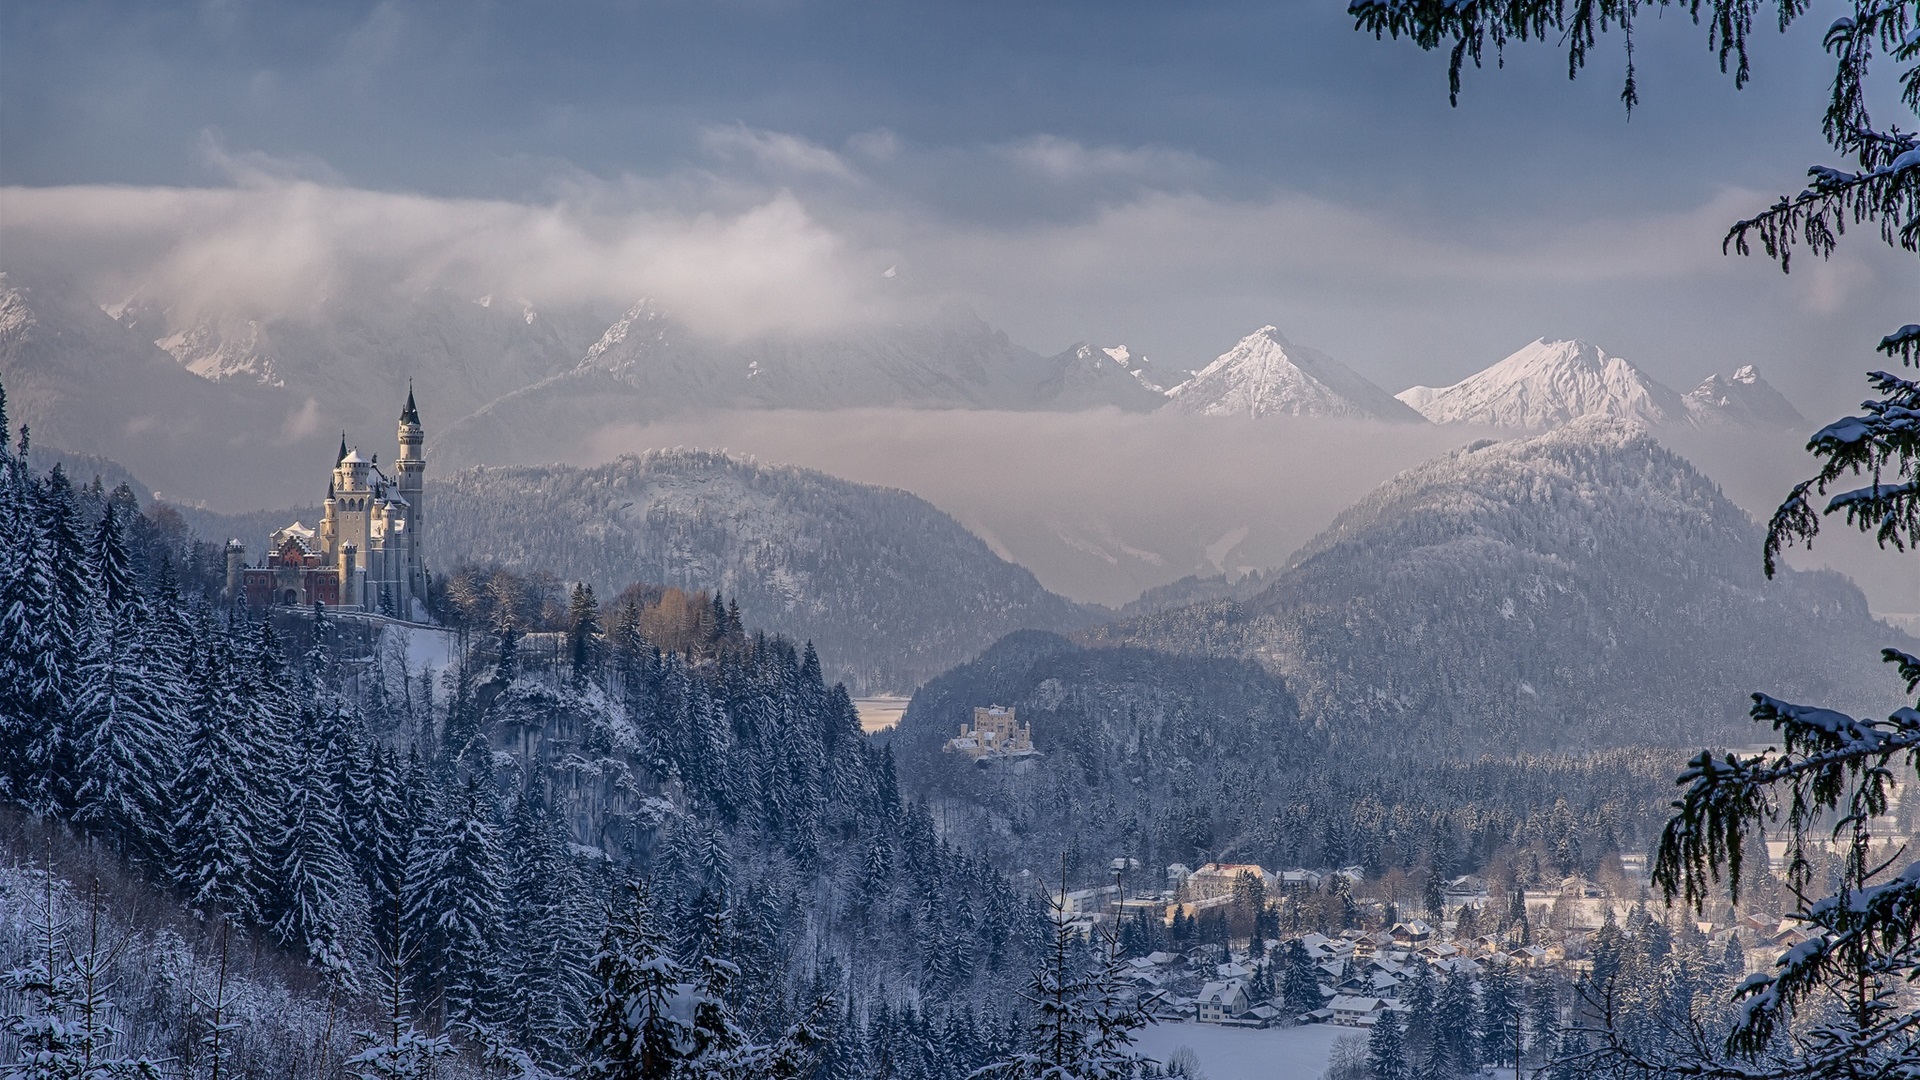 General 1920x1080 forest castle mountains winter clouds sky nature landscape Neuschwanstein Castle